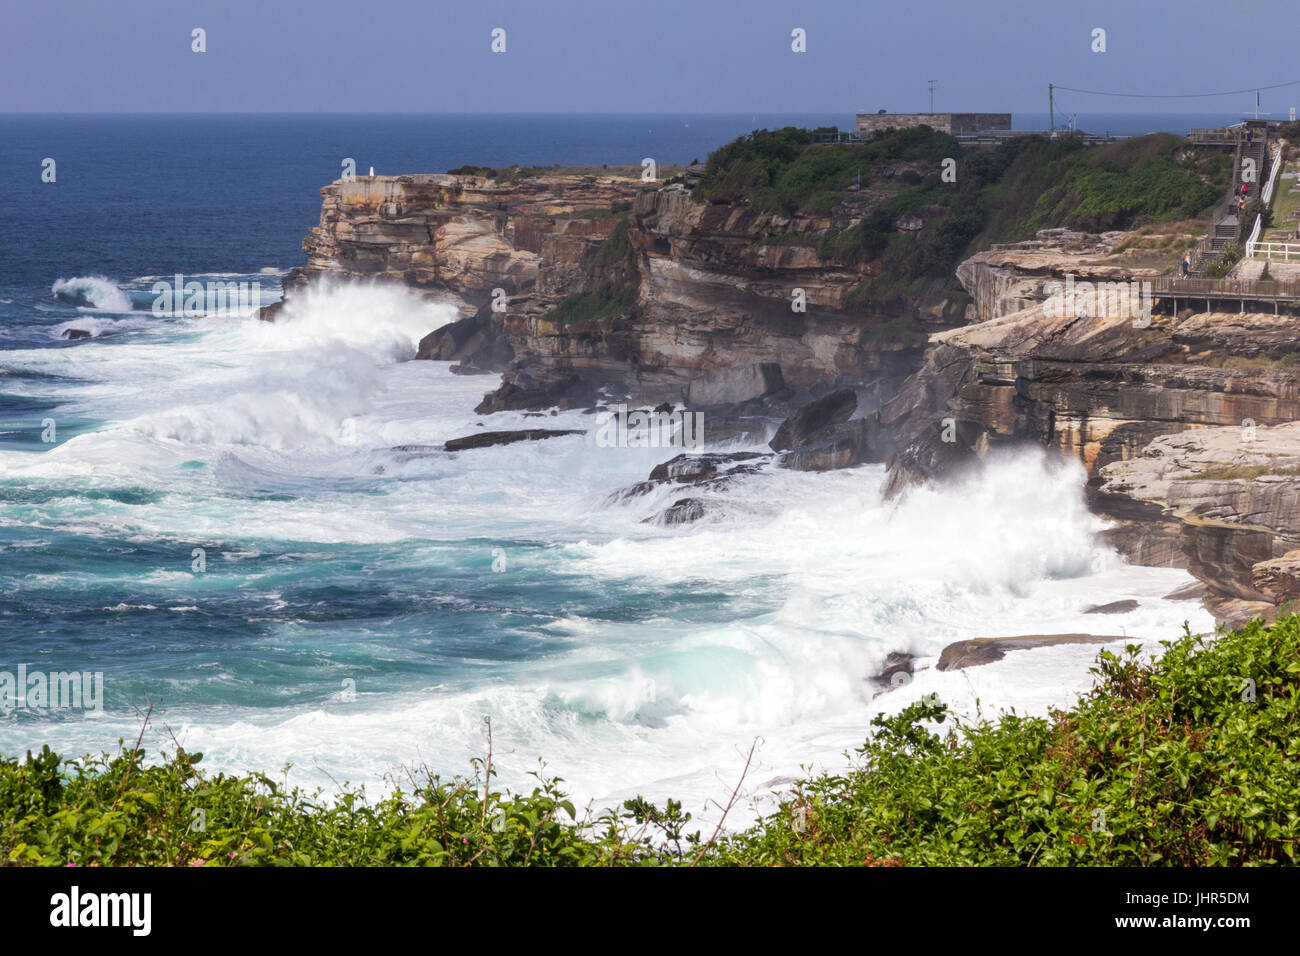 Rough seas off the  Sydney coast at Bronte, New South Wales, Australia Stock Photo